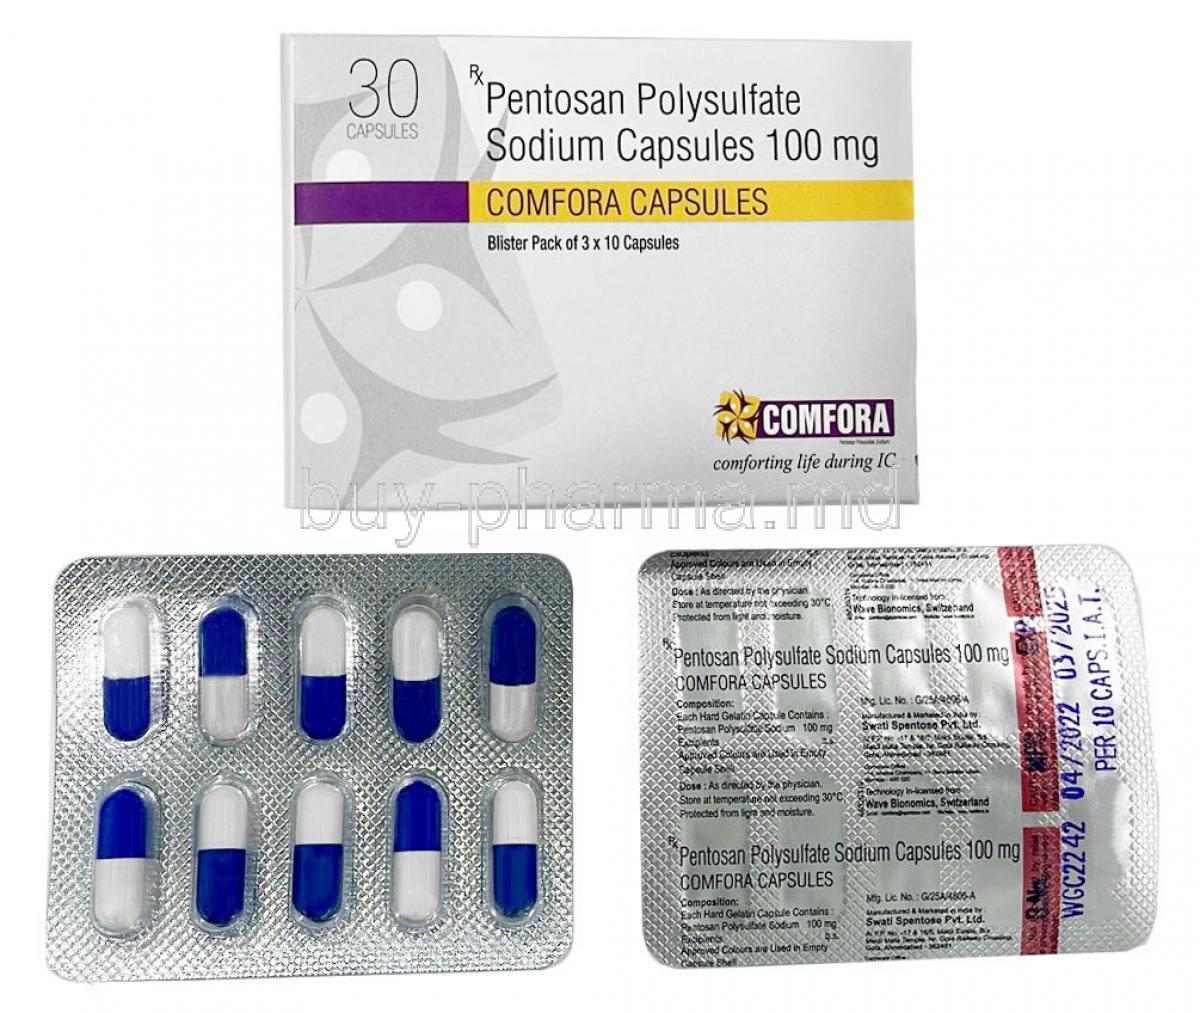 Comfora, Pentosan polysulfate sodium 100mg,  Swati Spentose Pvt Ltd, Box front view, blisterpack information